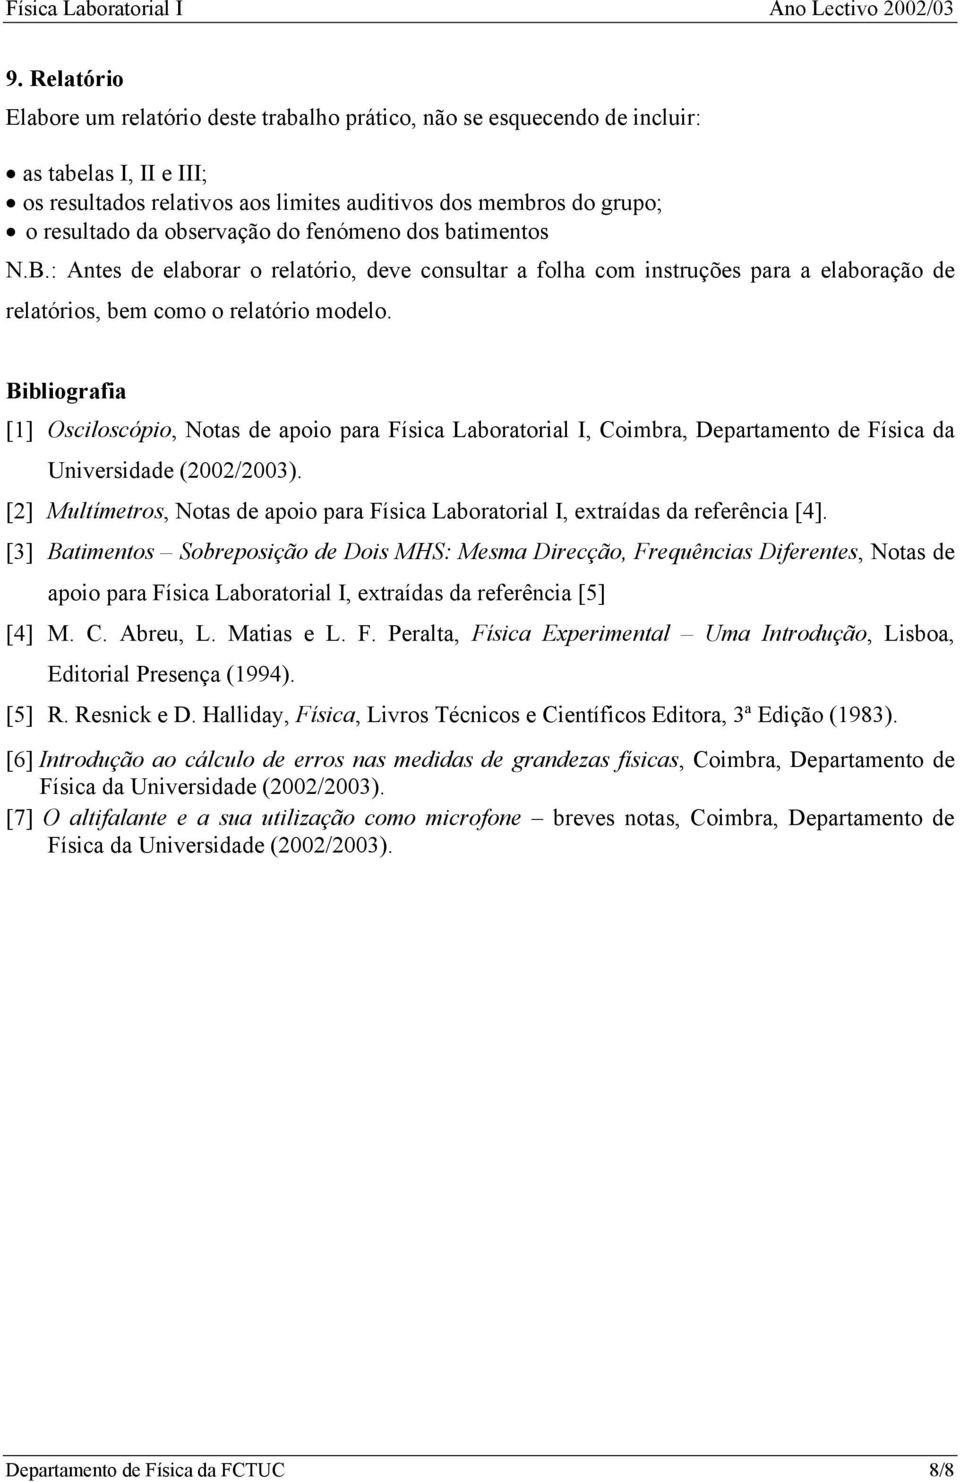 Bibliografia [1] Osciloscópio, Notas de apoio para Física Laboratorial I, Coimbra, Departamento de Física da Universidade (2002/2003).